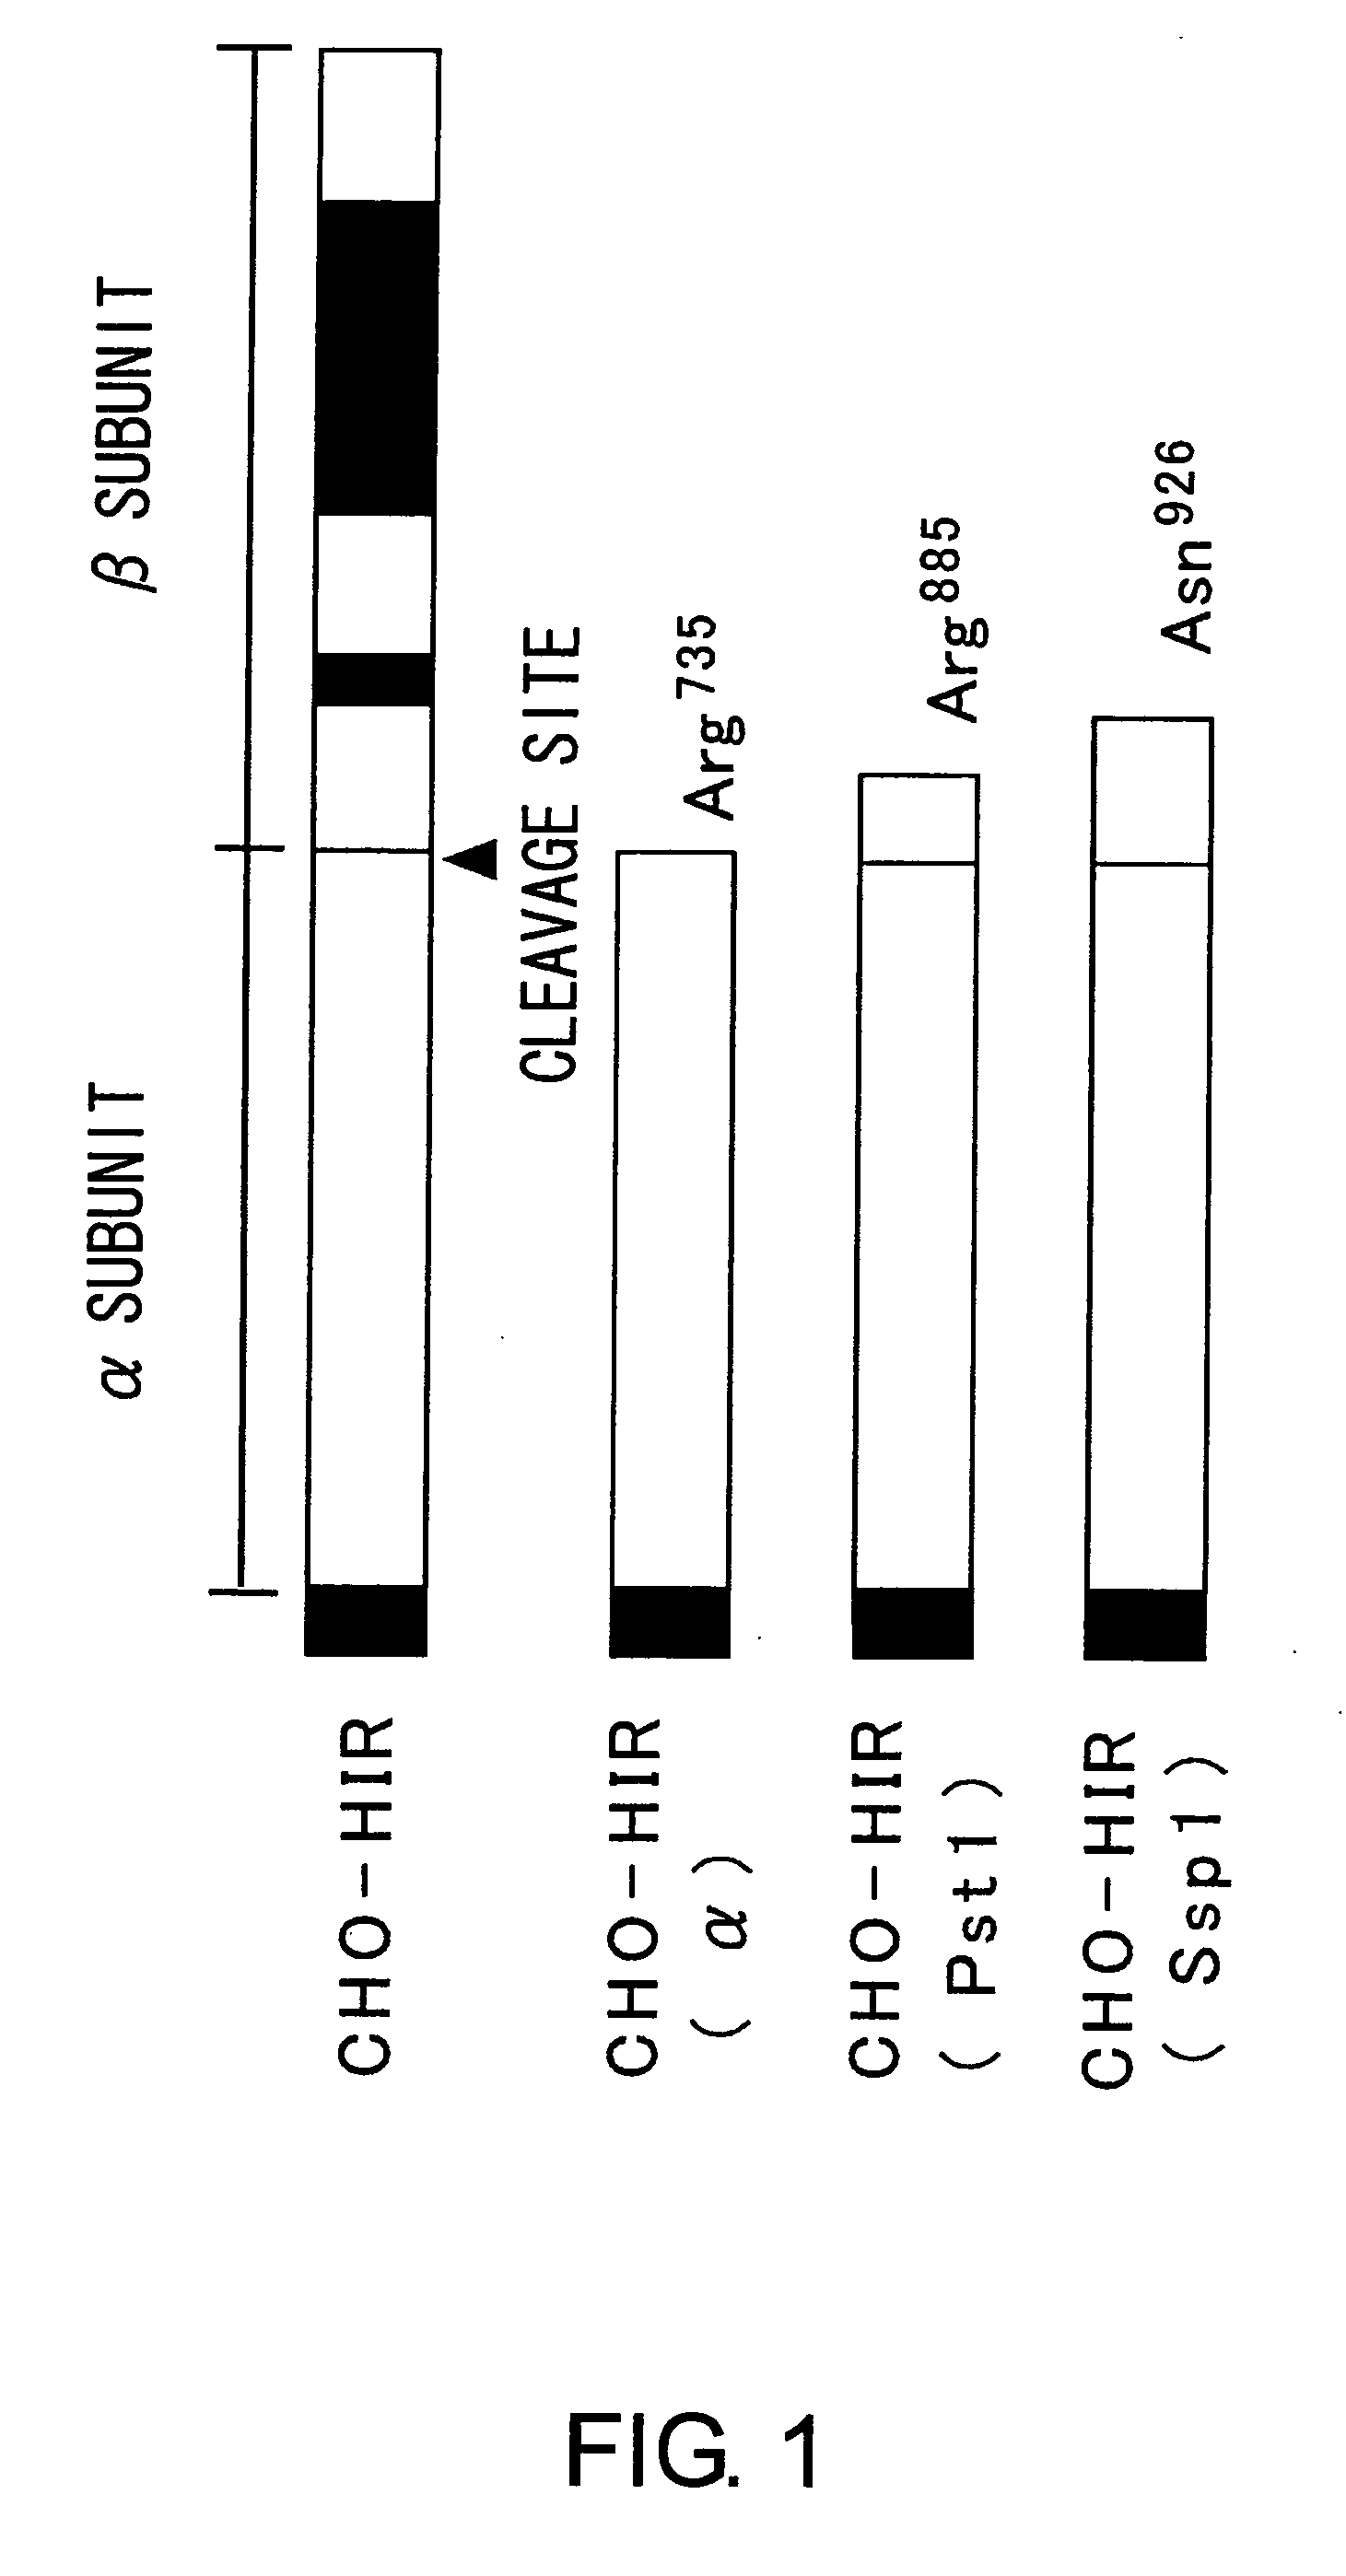 Methods for measuring the insulin receptor alpha subunit